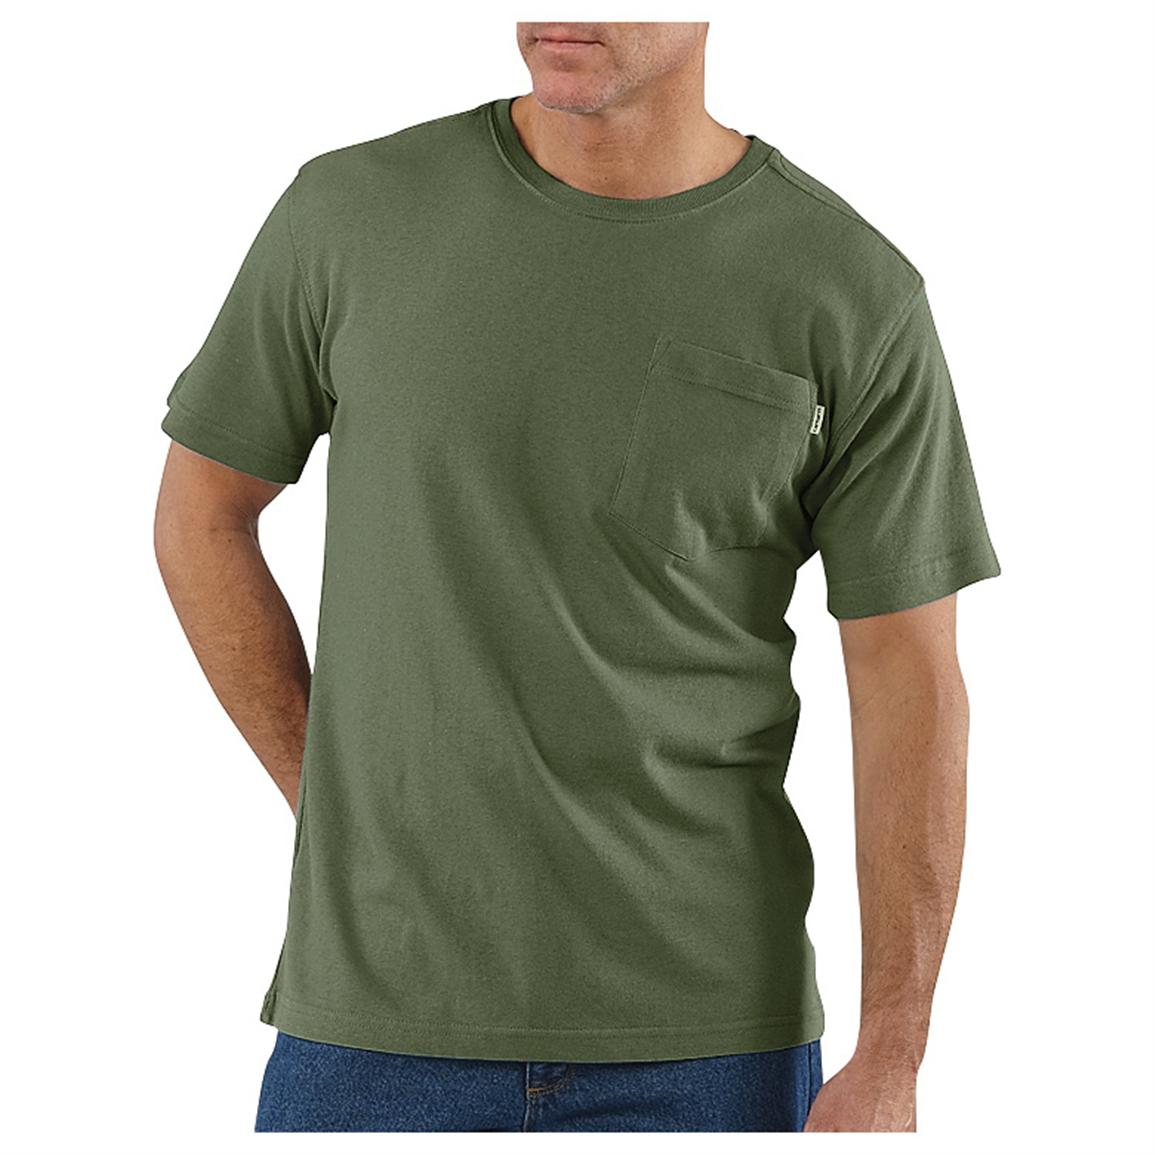 Carhartt® Pocket T-shirt - 285011, T-Shirts at Sportsman's Guide